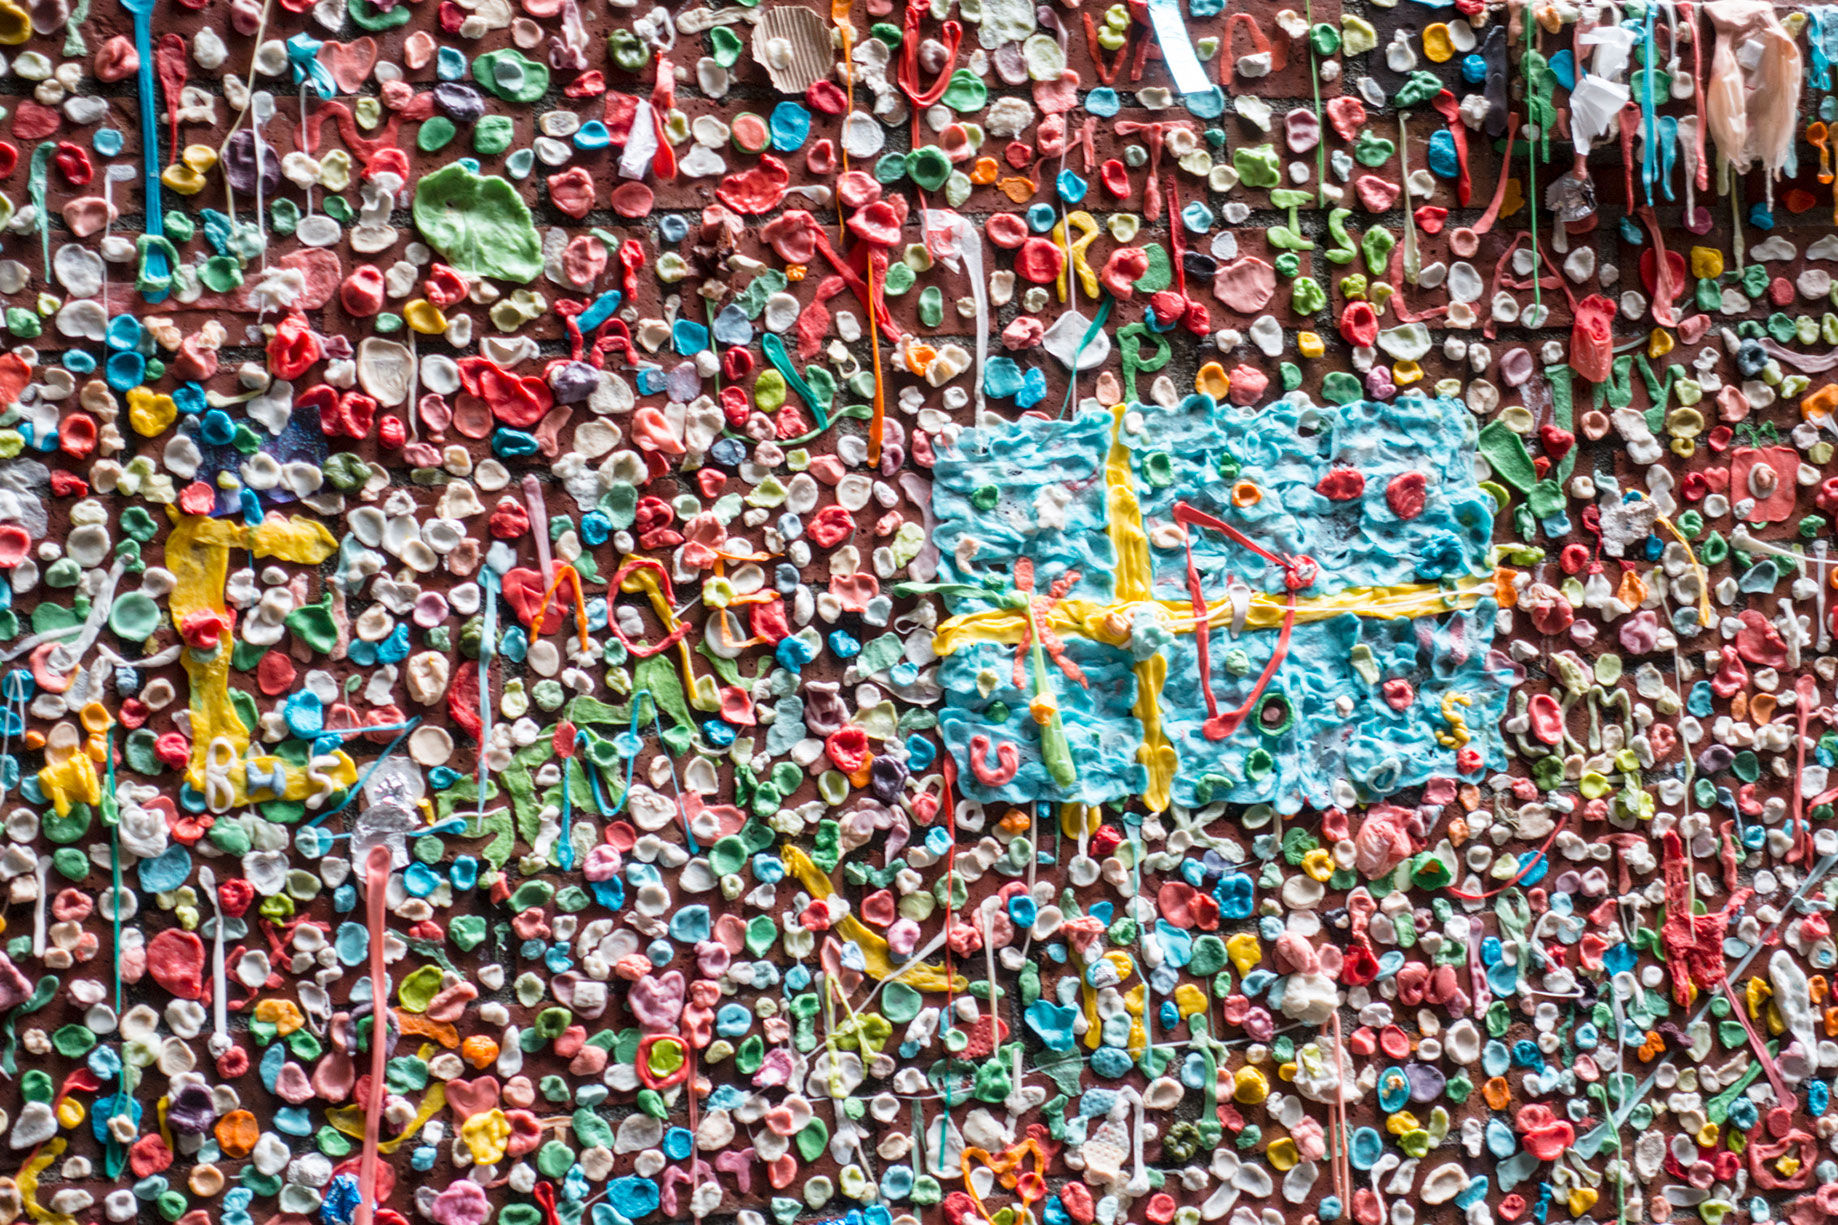 Gum Wall - So Tastes America/